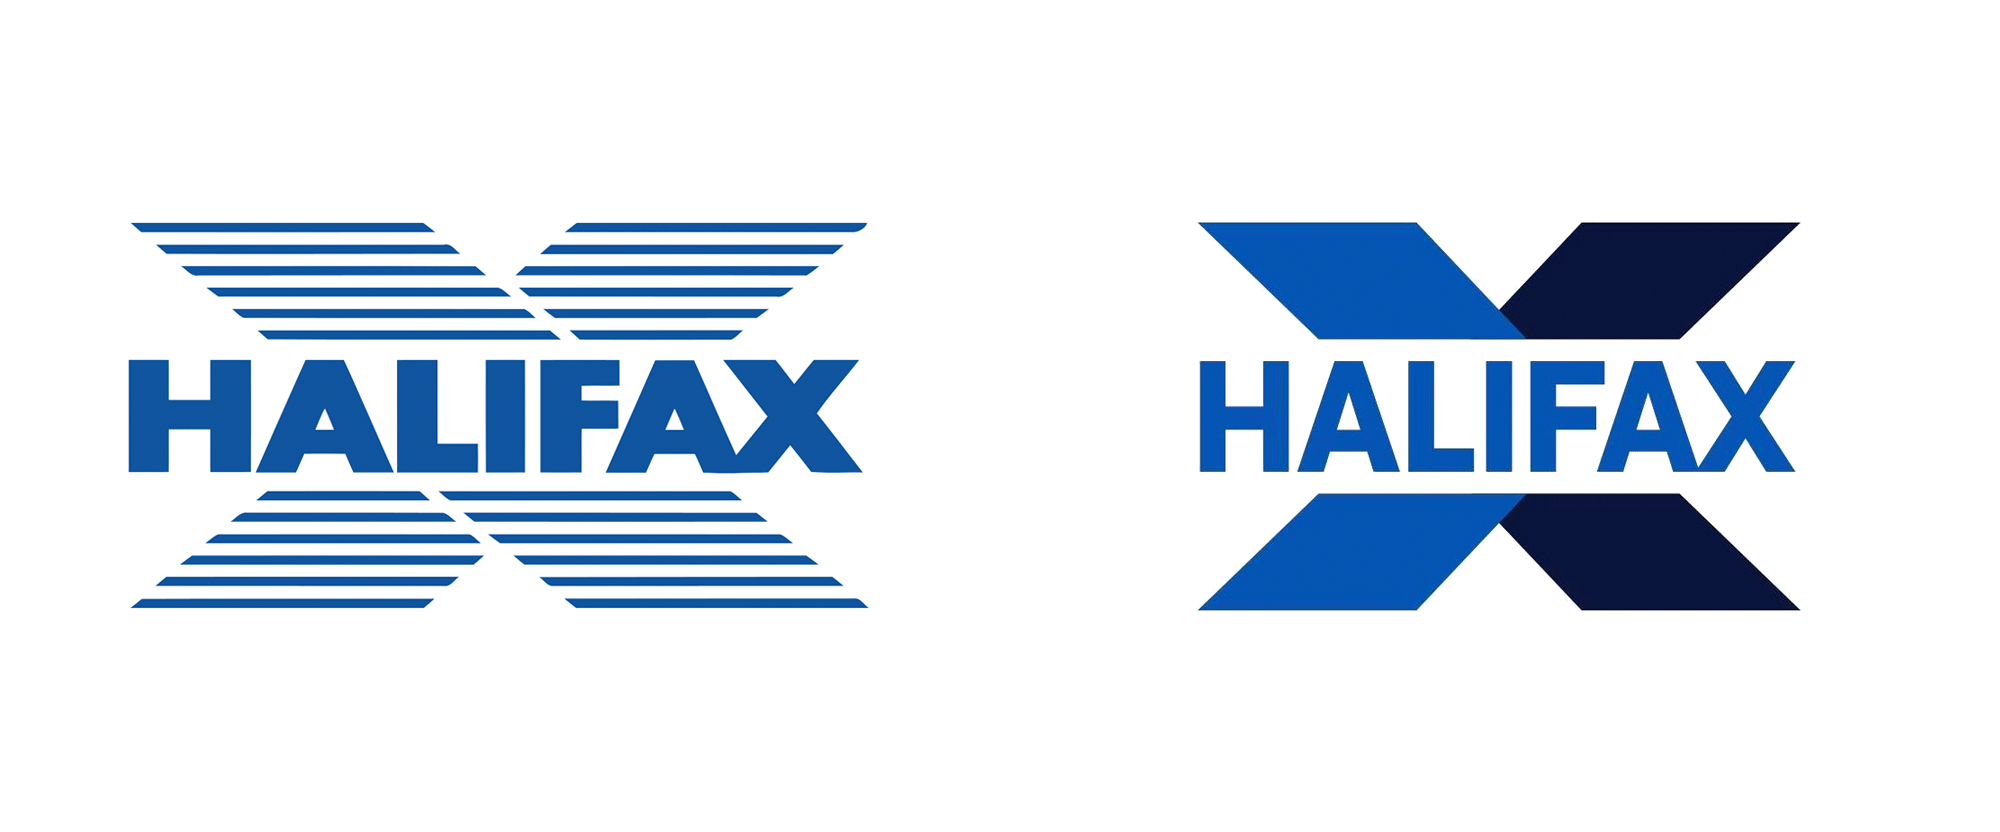 Halifax Logo - Brand New: New Logo and Identity for Halifax by Rufus Leonard